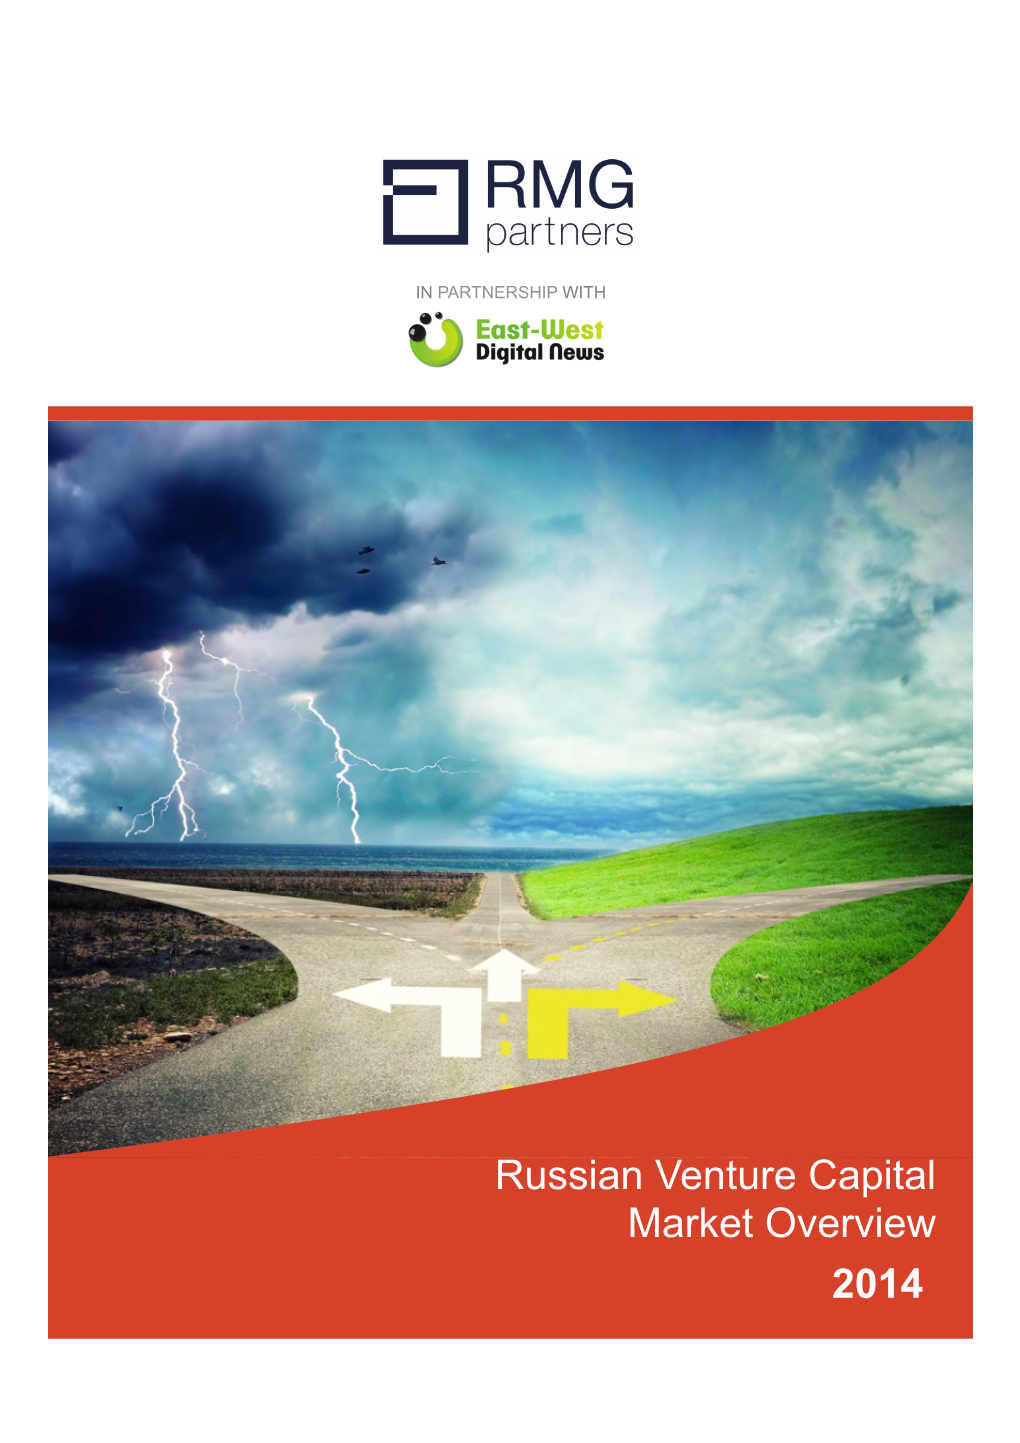 Russian Venture Capital Market Overview 2014 Contents